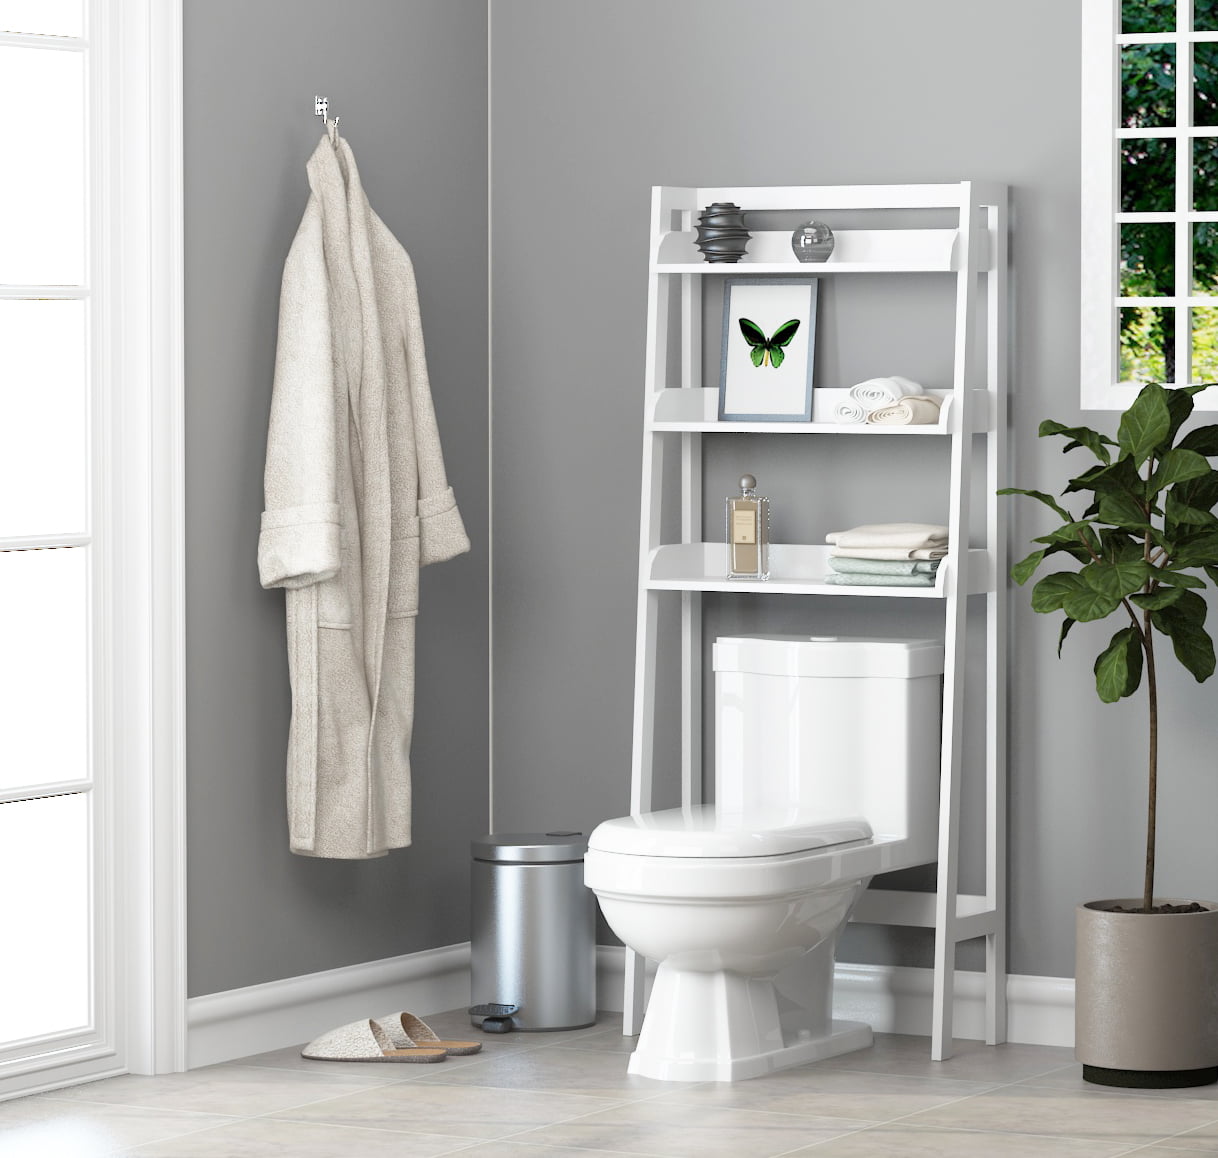 Details about   3 Shelf Over The Cut-Off Toilet Rack Bathroom Space Saver MDF Towel Storage Rack 